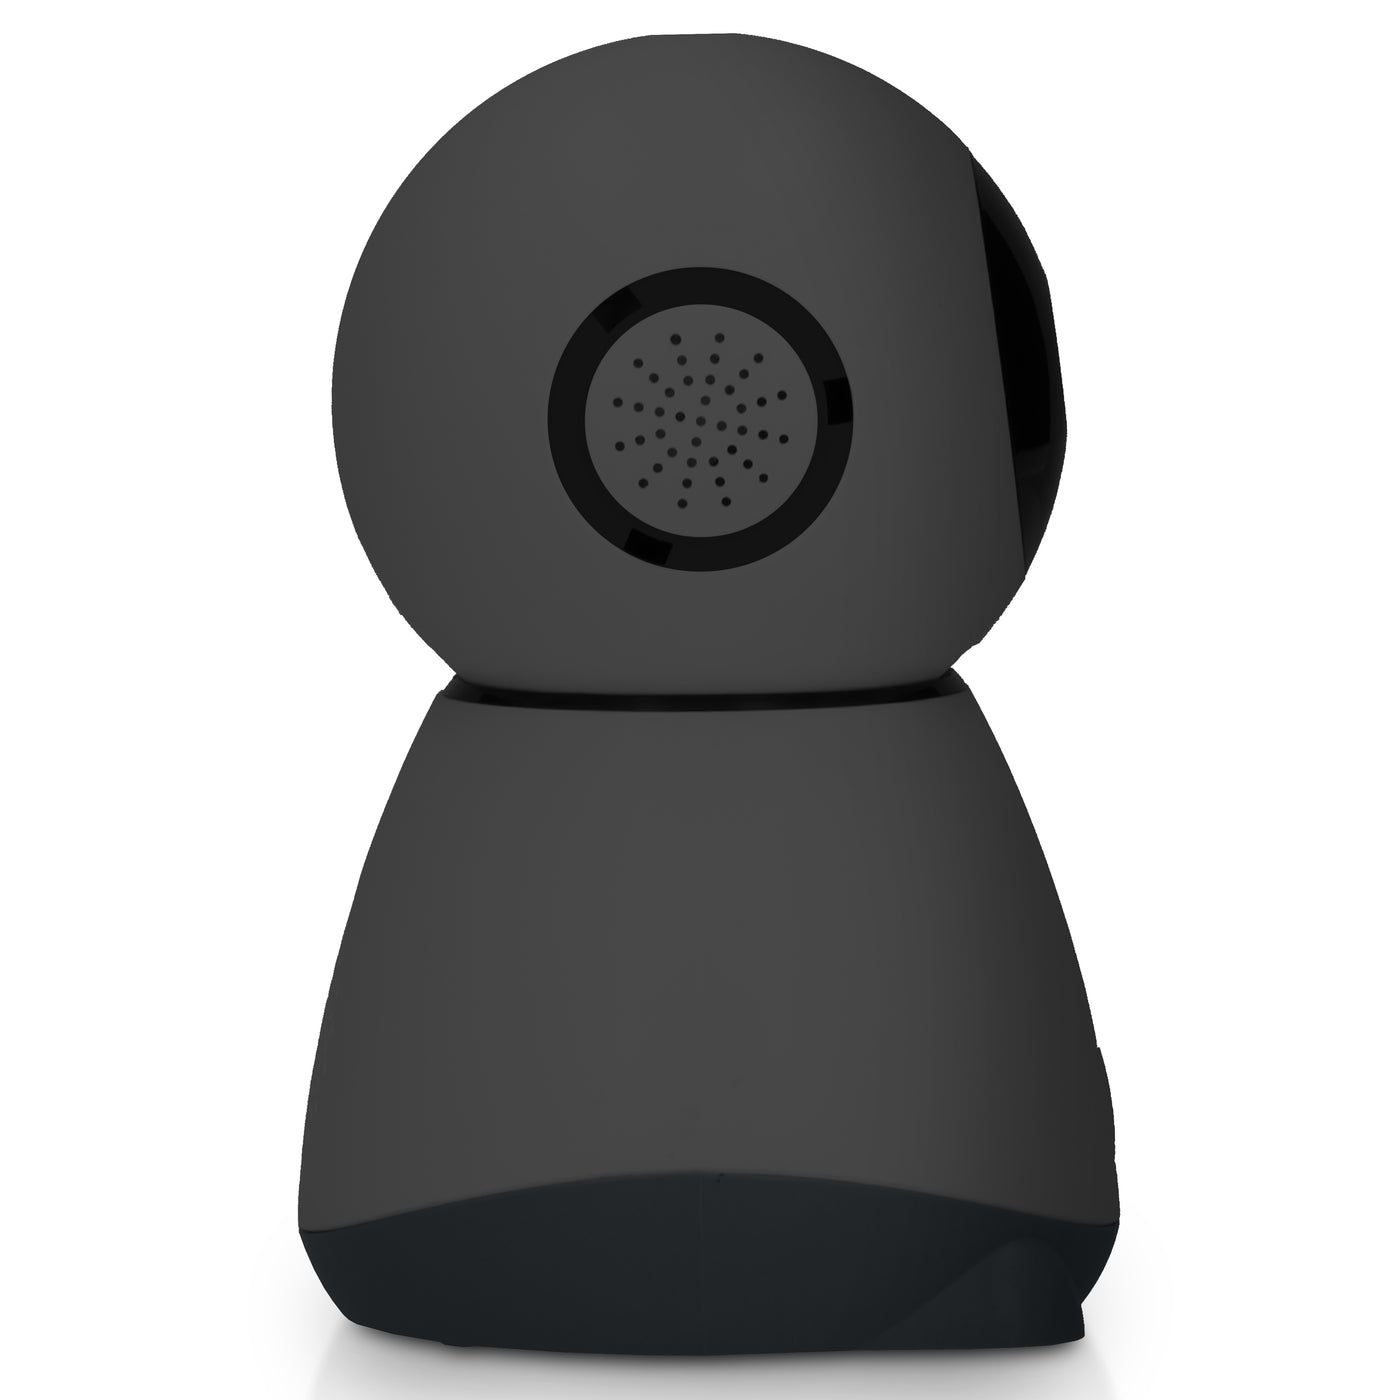 Alecto SMARTBABY10BK - Babyphone Wi-Fi avec caméra - Noir